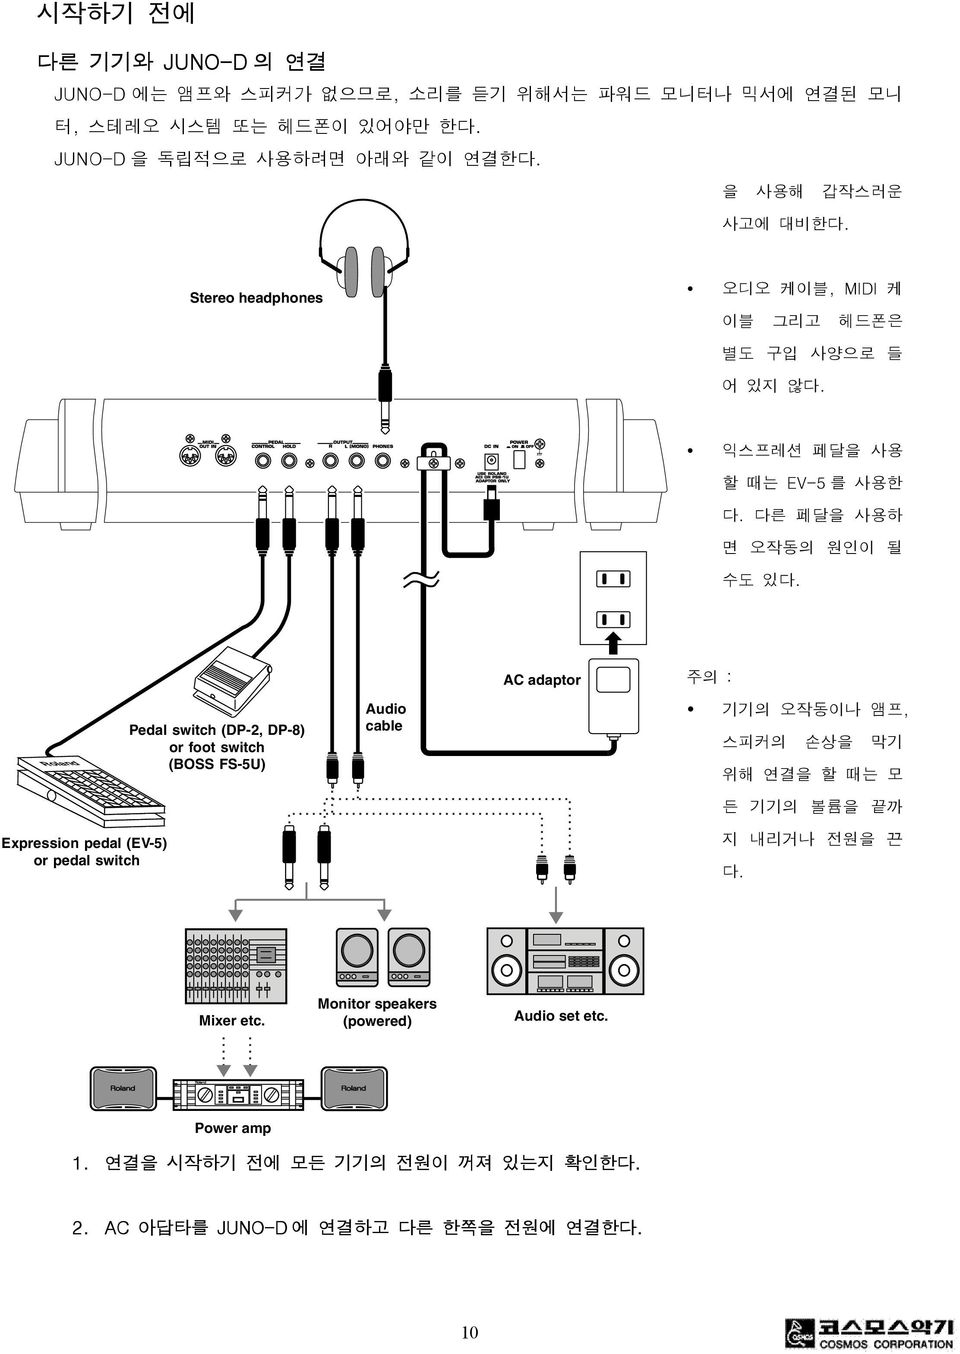 AC adaptor 주의 : Roland Pedal switch (DP-2, DP-8) or foot switch (BSS FS-5U) Audio cable 기기의 오작동이나 앰프, 스피커의 손상을 막기 위해 연결을 할 때는 모 든 기기의 볼륨을 끝까 Expression pedal (EV-5) or